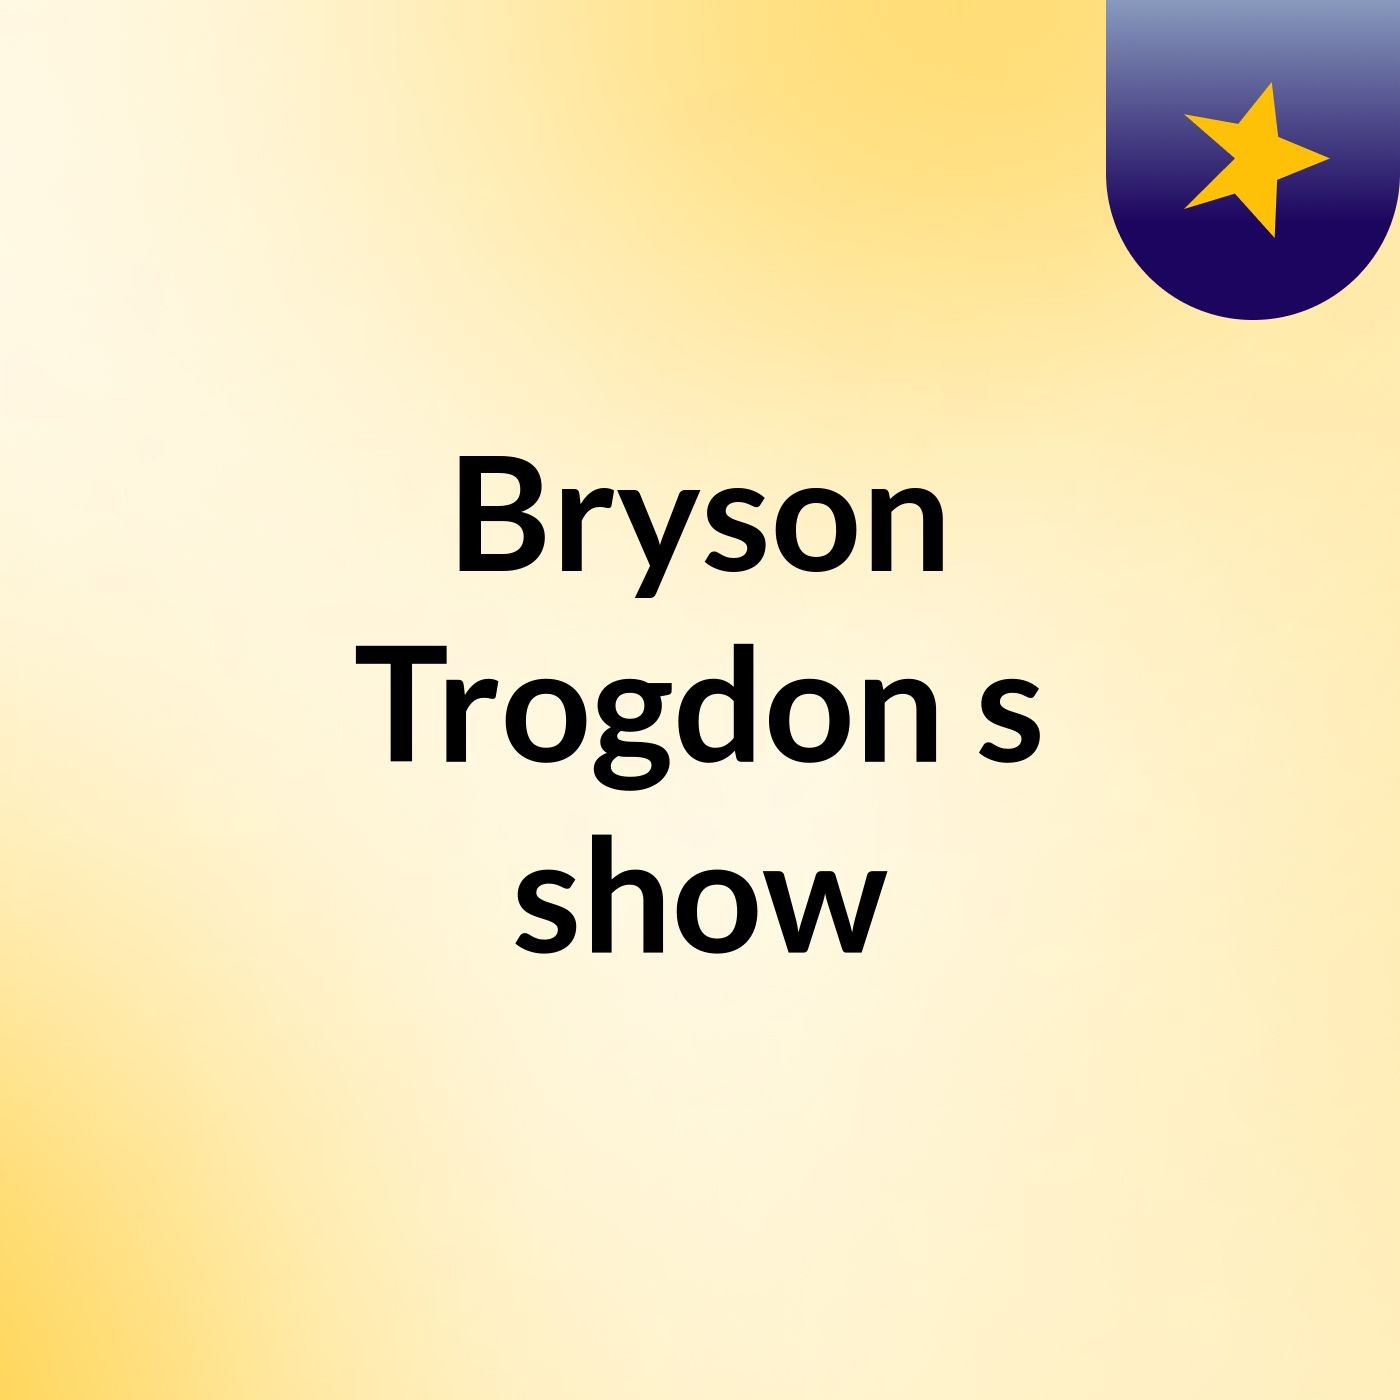 Bryson Trogdon's show